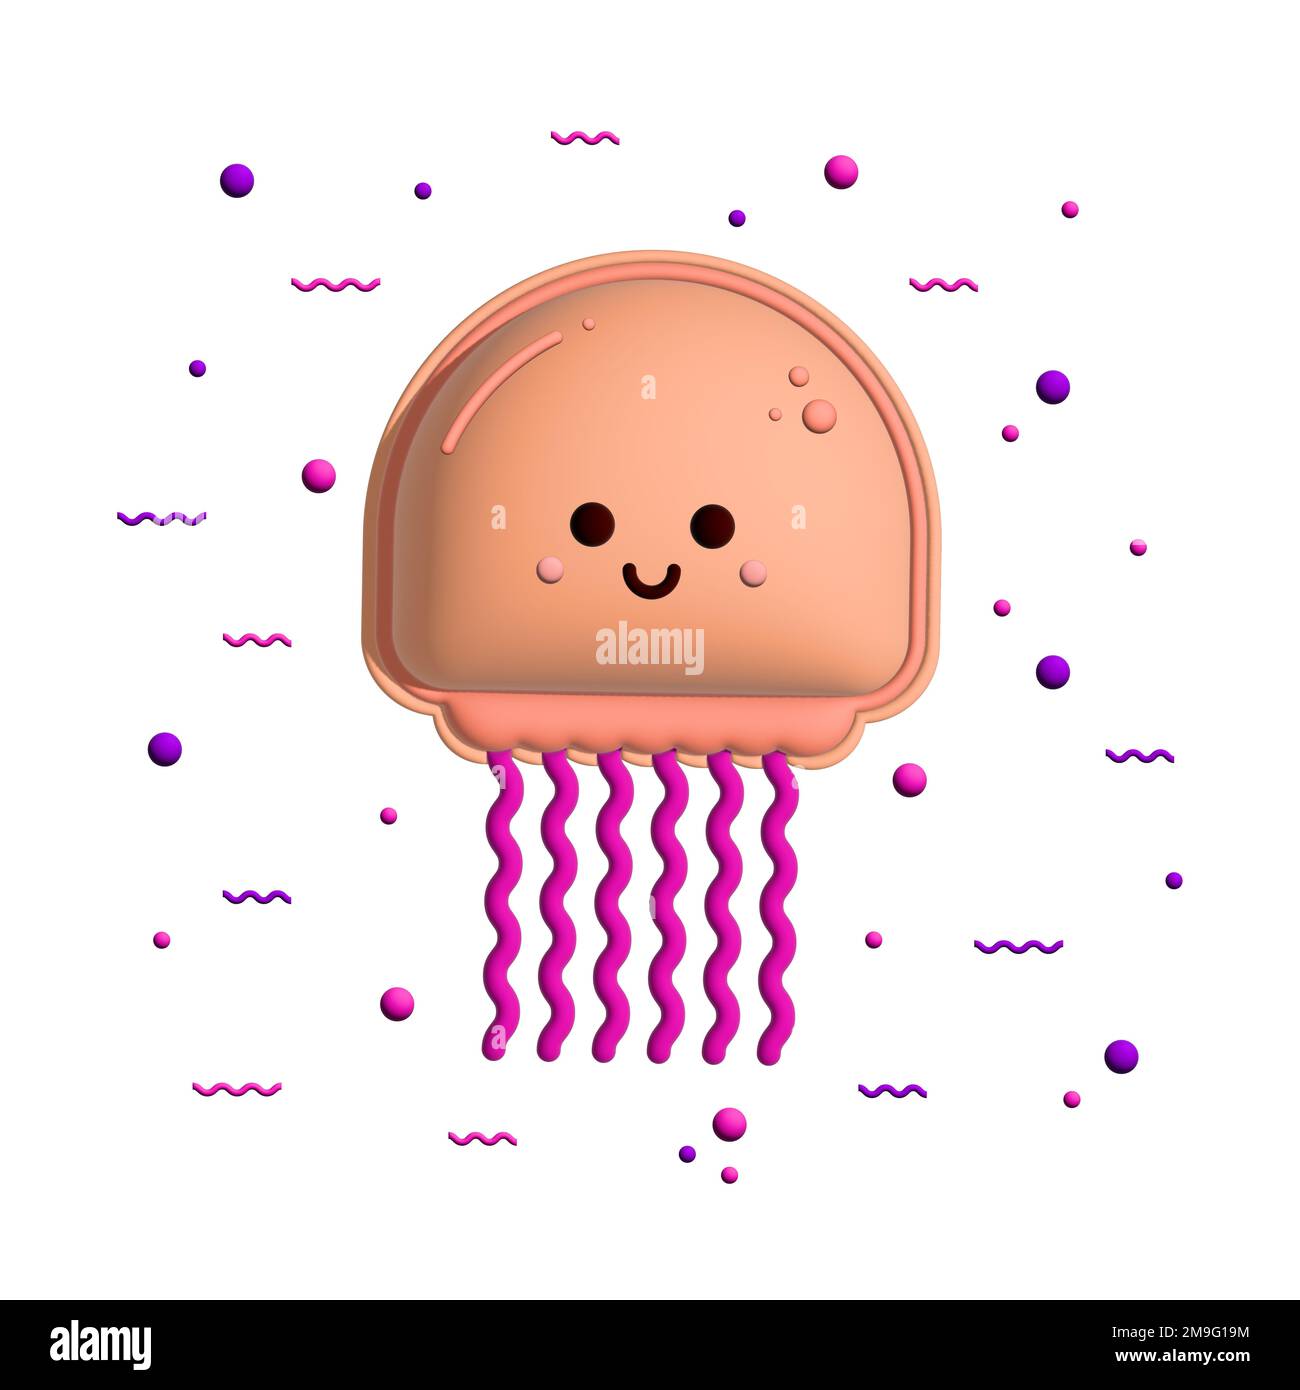 Cartoon jellyfish 3d rendering illustration Stock Photo